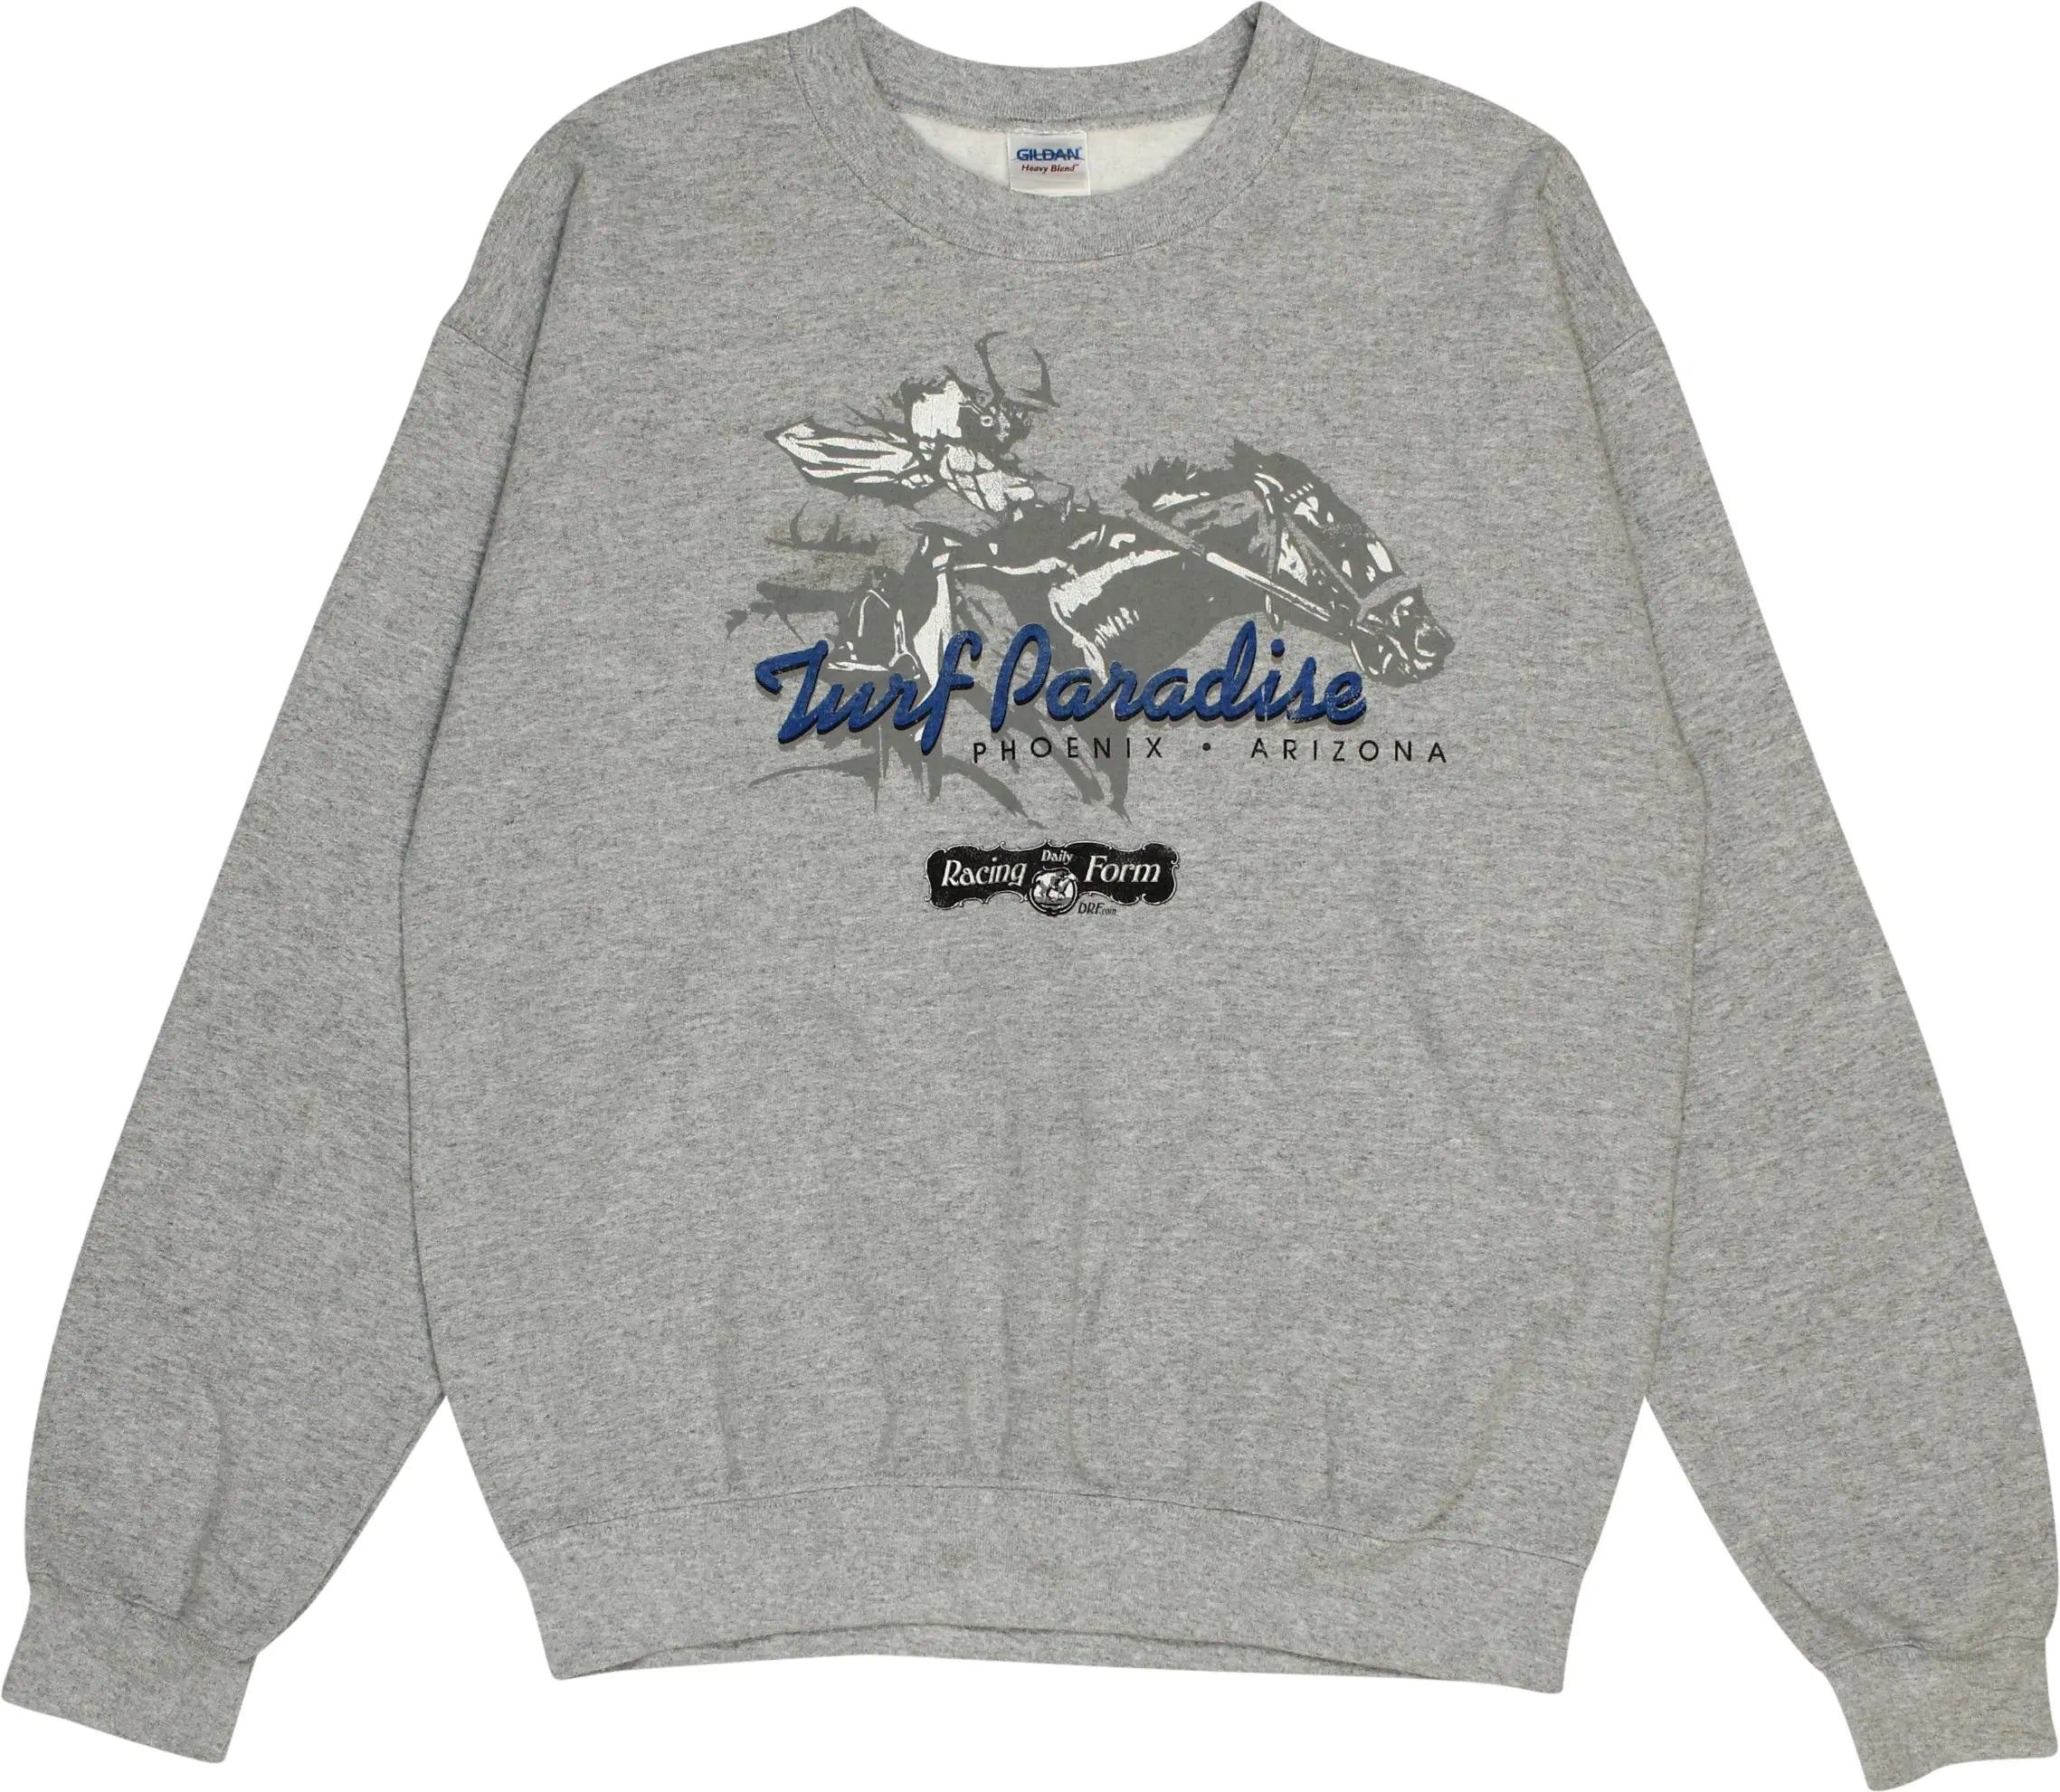 Gildan - Turf Paradise Horse Racetrack Phoenix Arizona Sweater- ThriftTale.com - Vintage and second handclothing